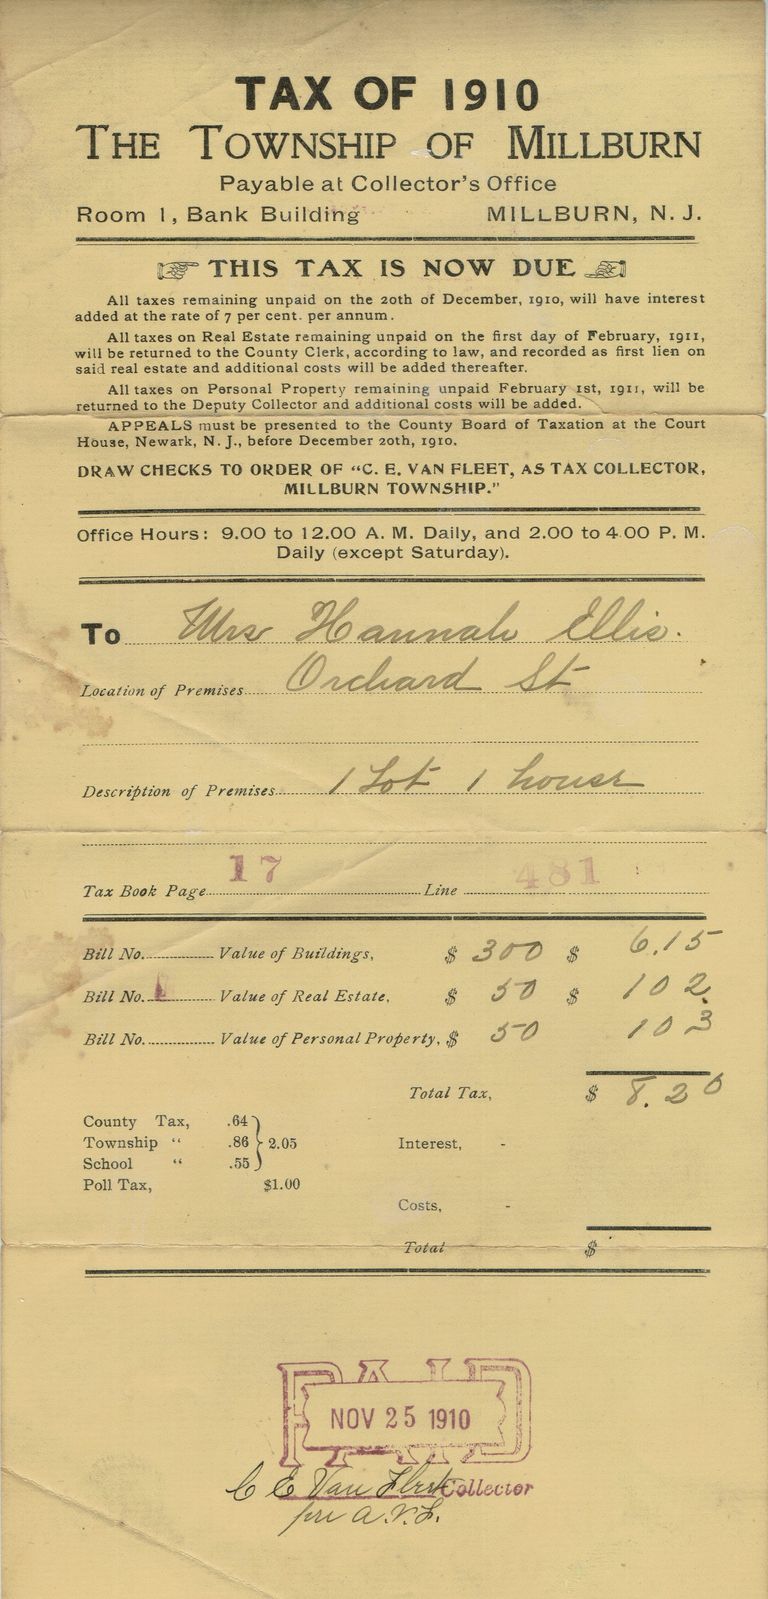          Ellis: Hannah Ellis Tax Bill, 1910 picture number 1
   